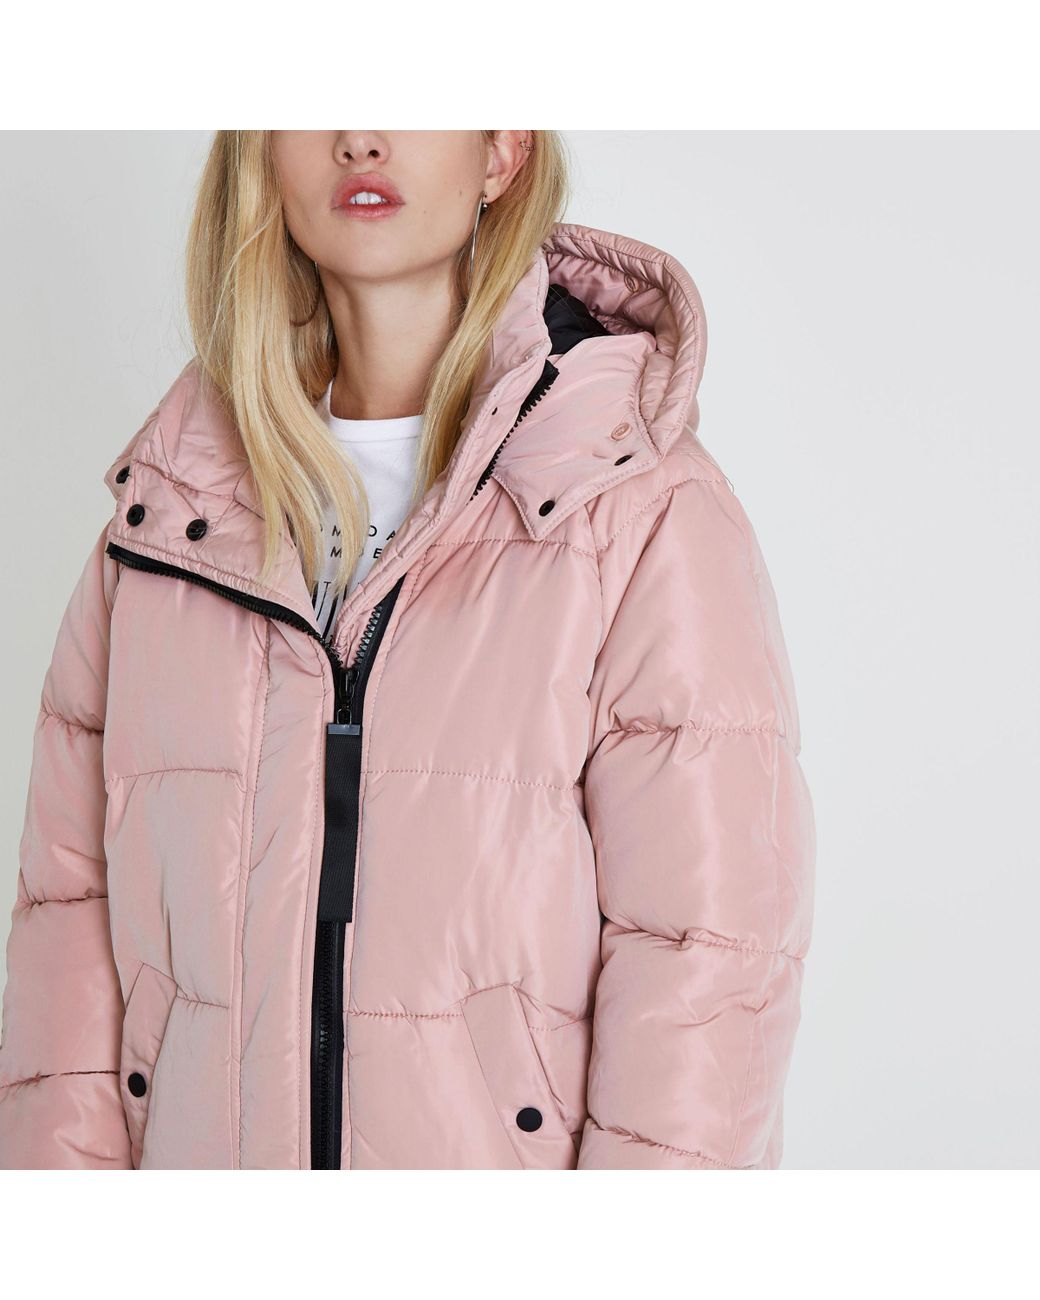 River Island Pink Fur Hood Oversized Puffer Jacket | Lyst Australia